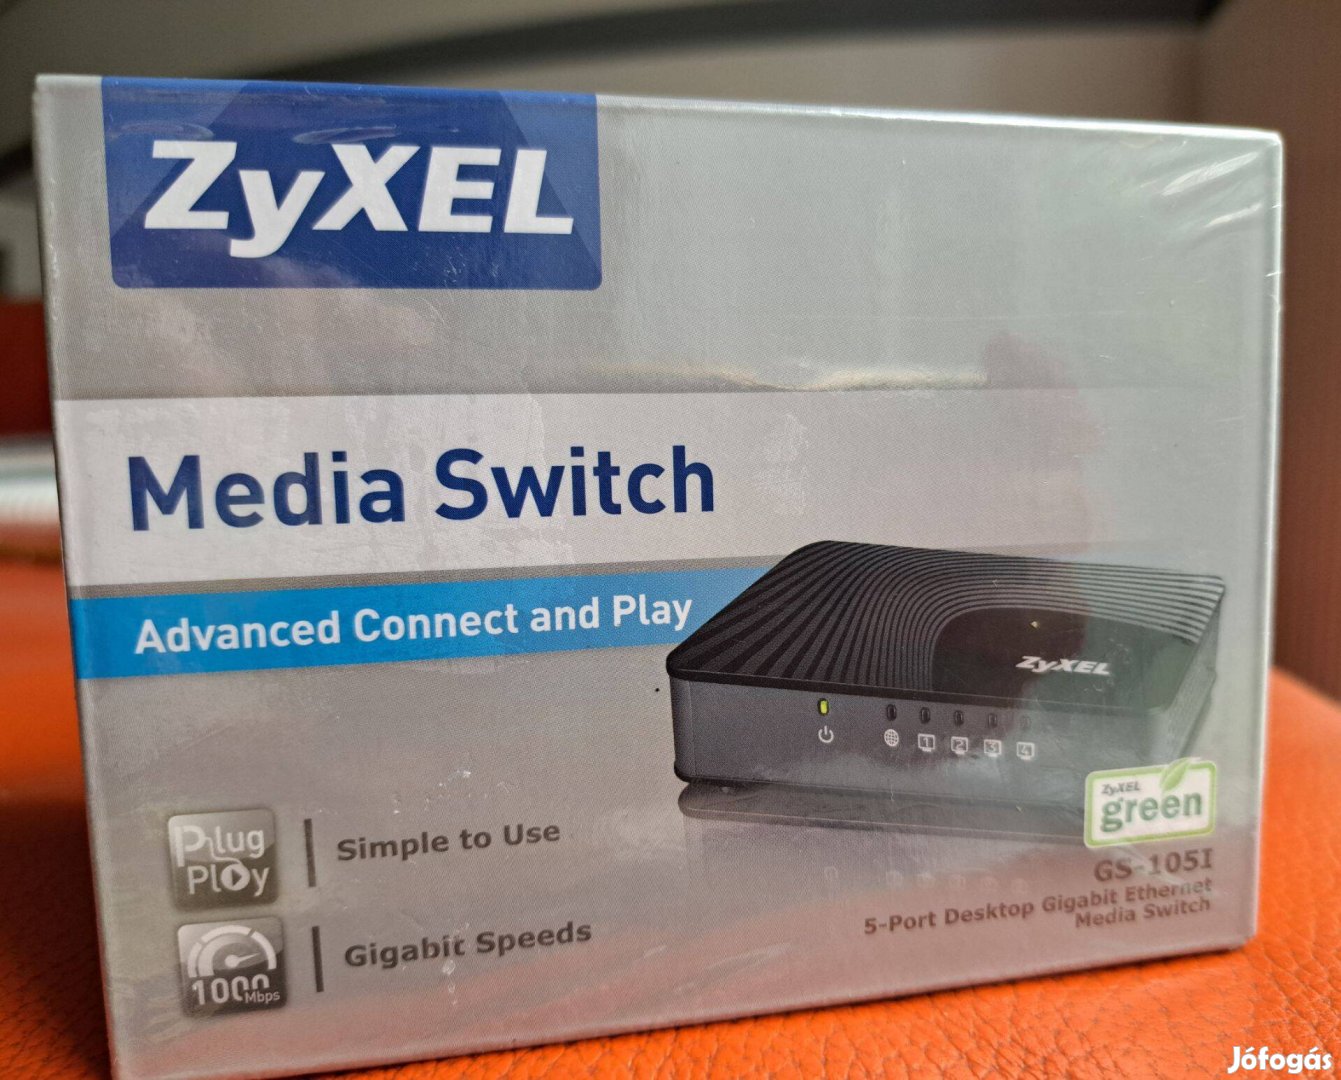 Eladó Zyxel Gigabit Ethernet 5 portos Media Switch GS-105I